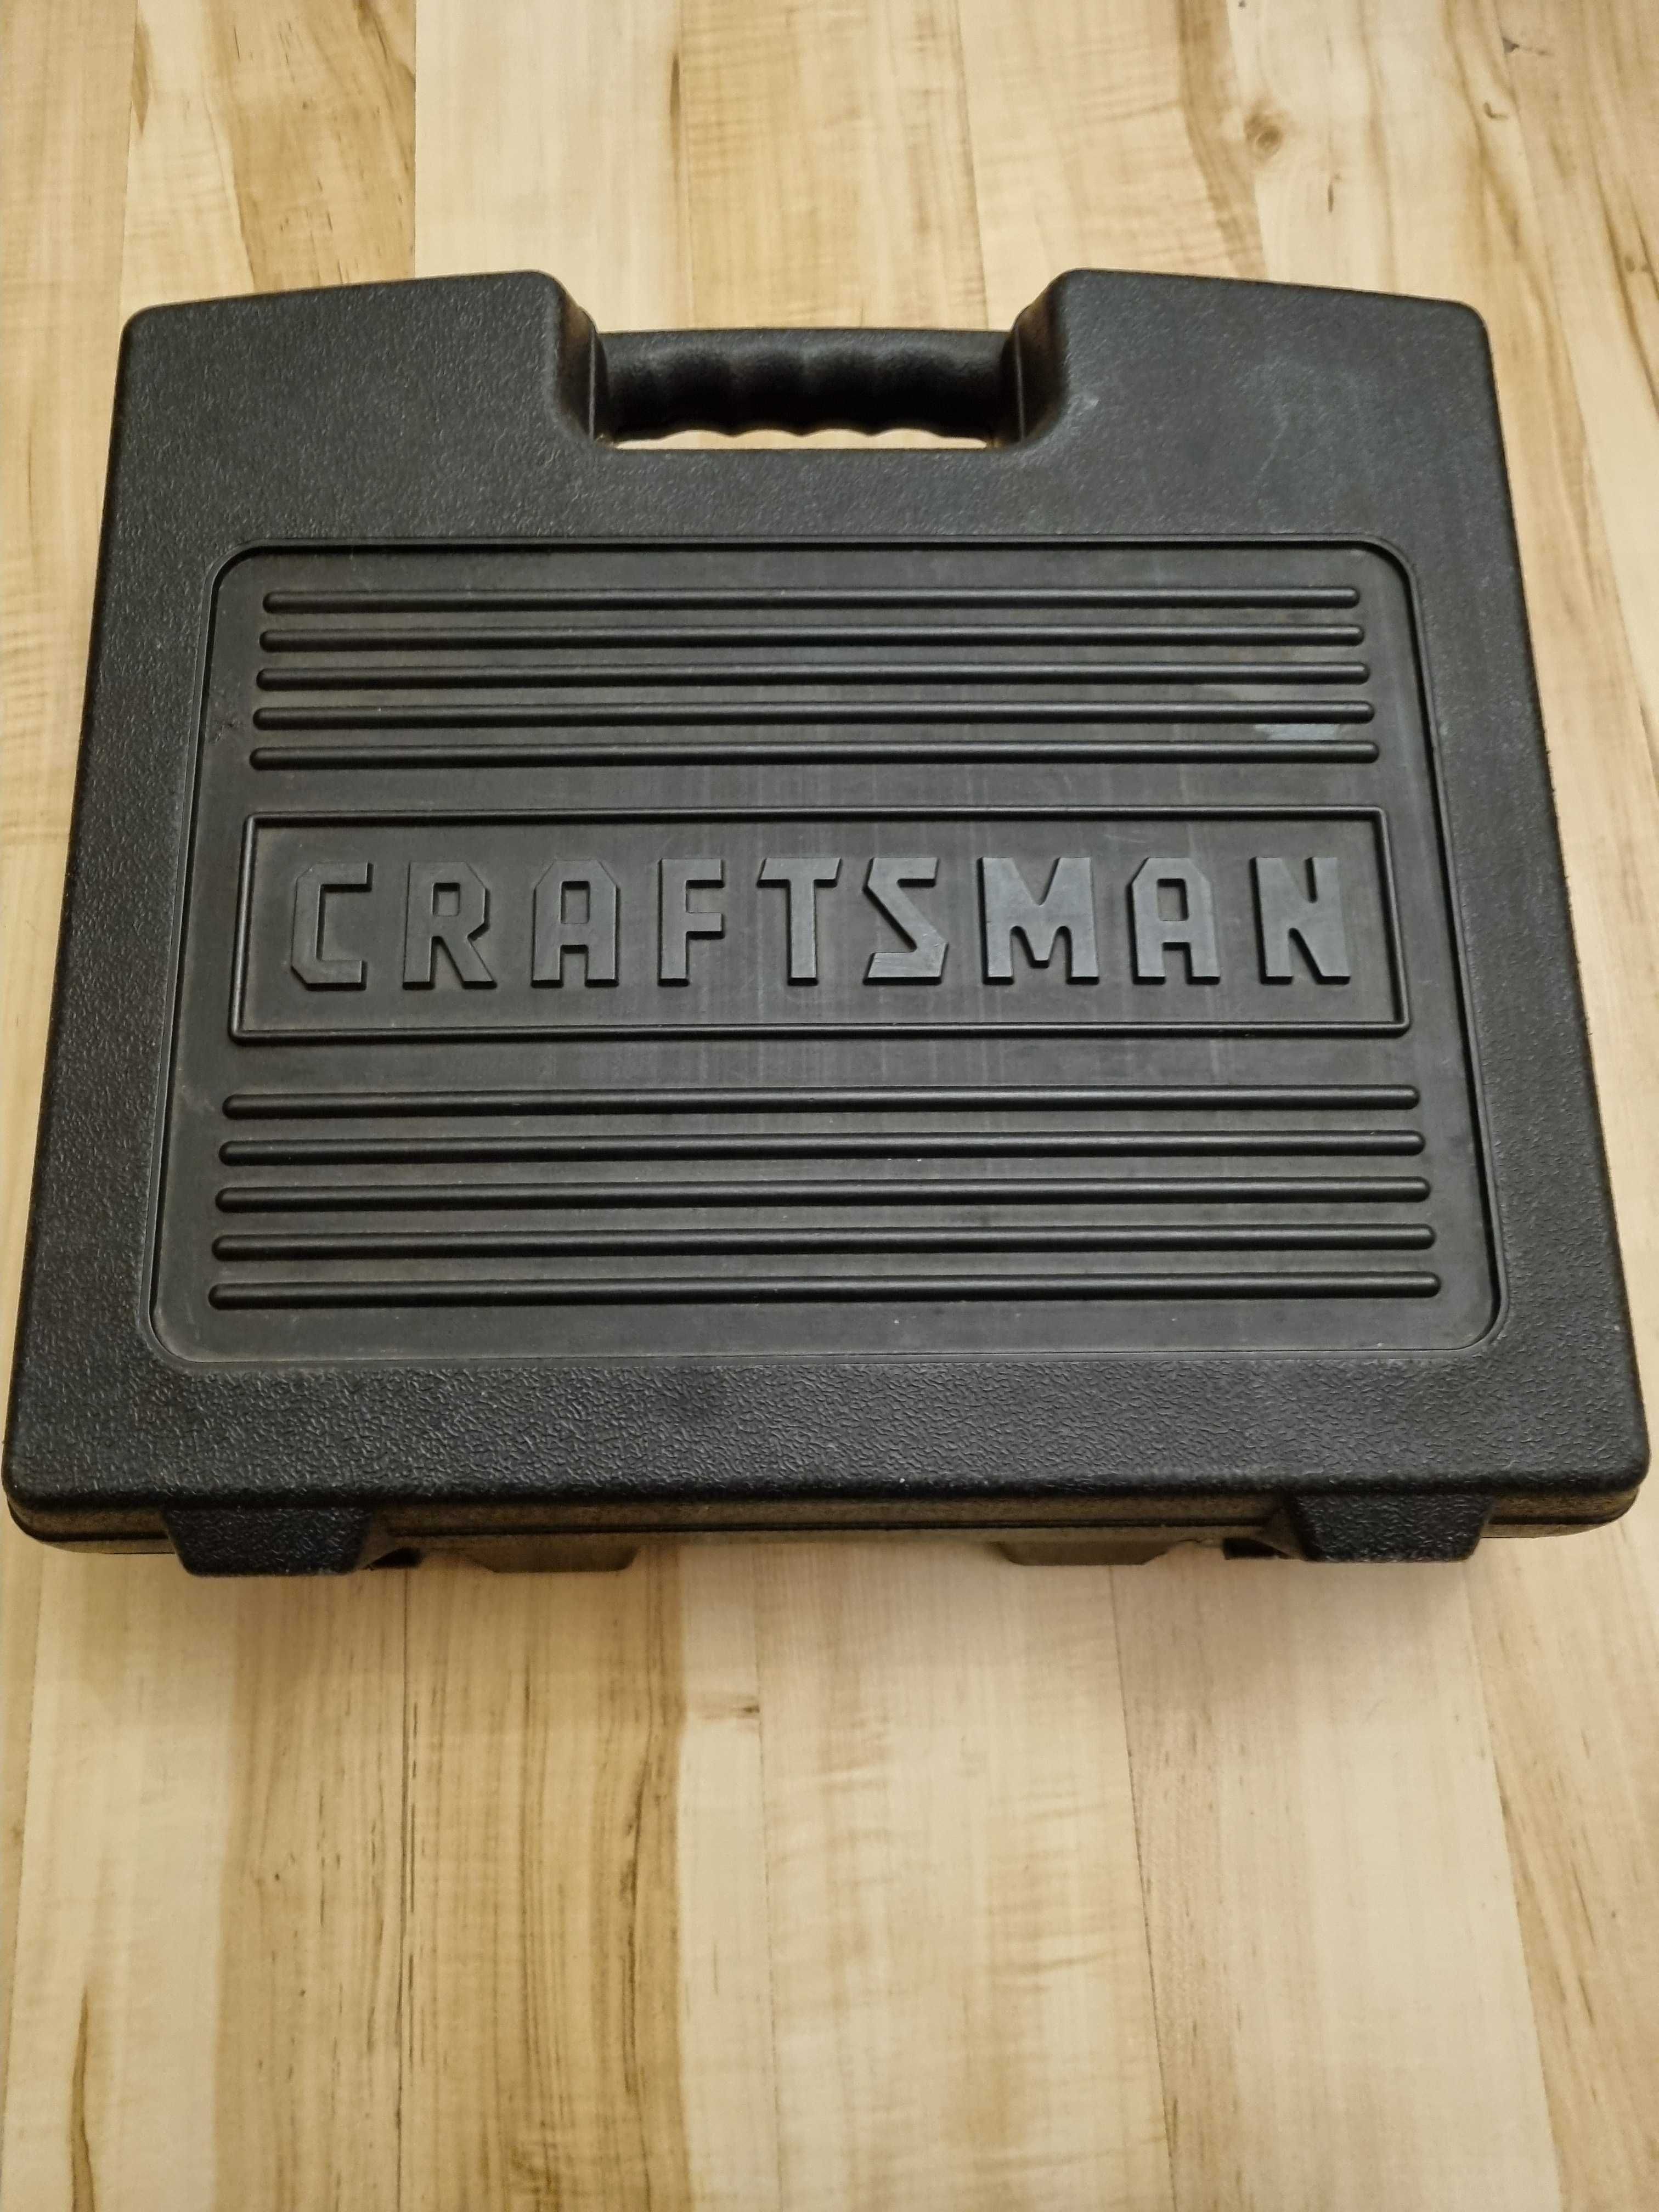 Wkrętarka Craftsman bez ładowarki